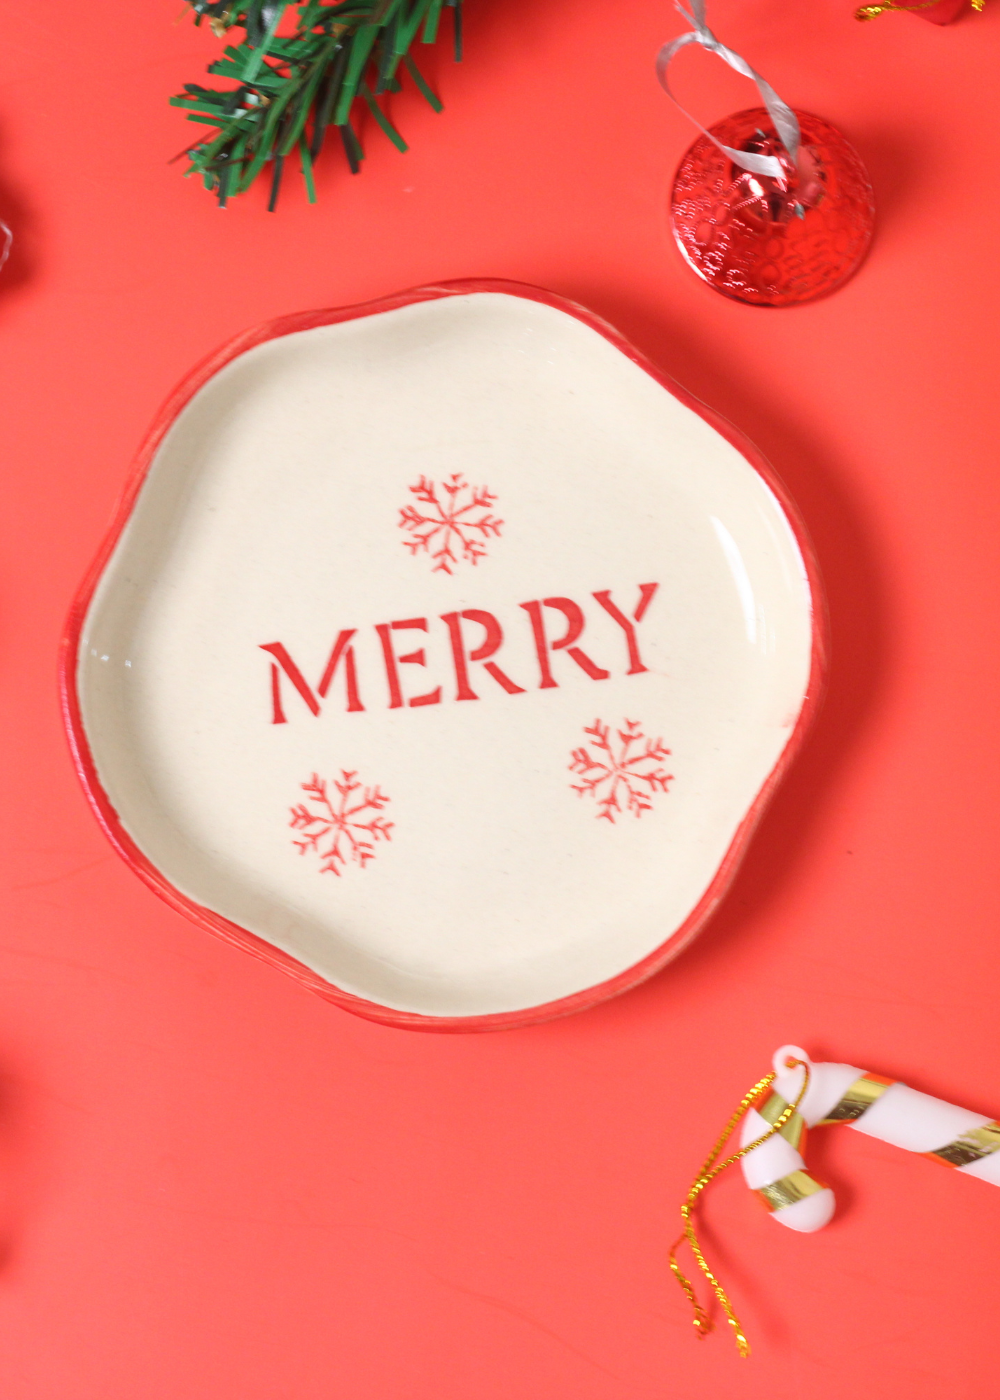 handmade merry dessert plate with snowflake design